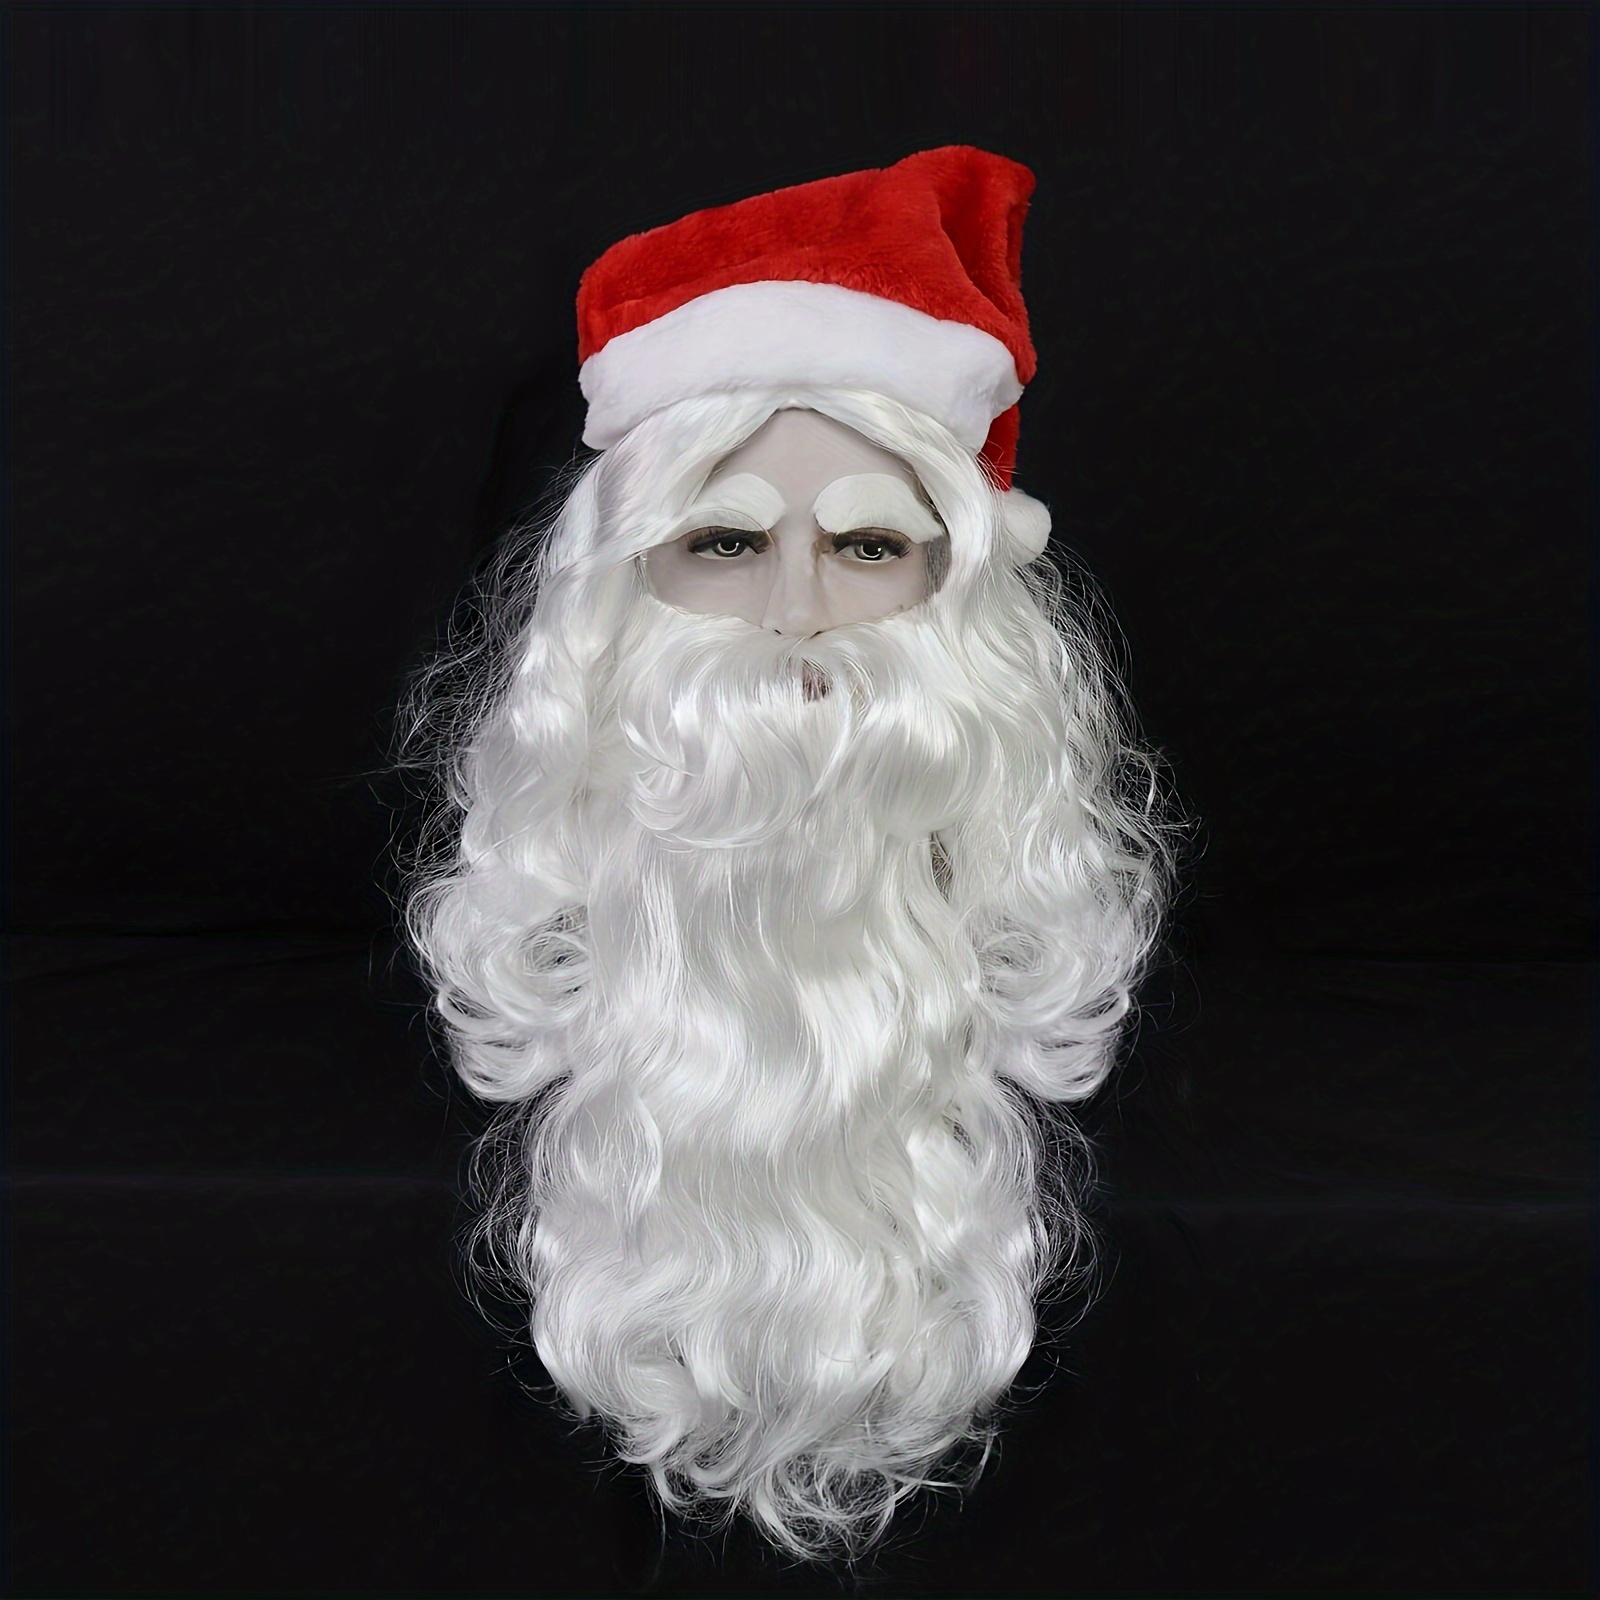 10pcs, Adult One Size Fits All Velour Burgundy Christmas Outfits Santa Claus Costume, Santa Claus Cosplay White Faux Fur Trim Zipper Santa Suit for